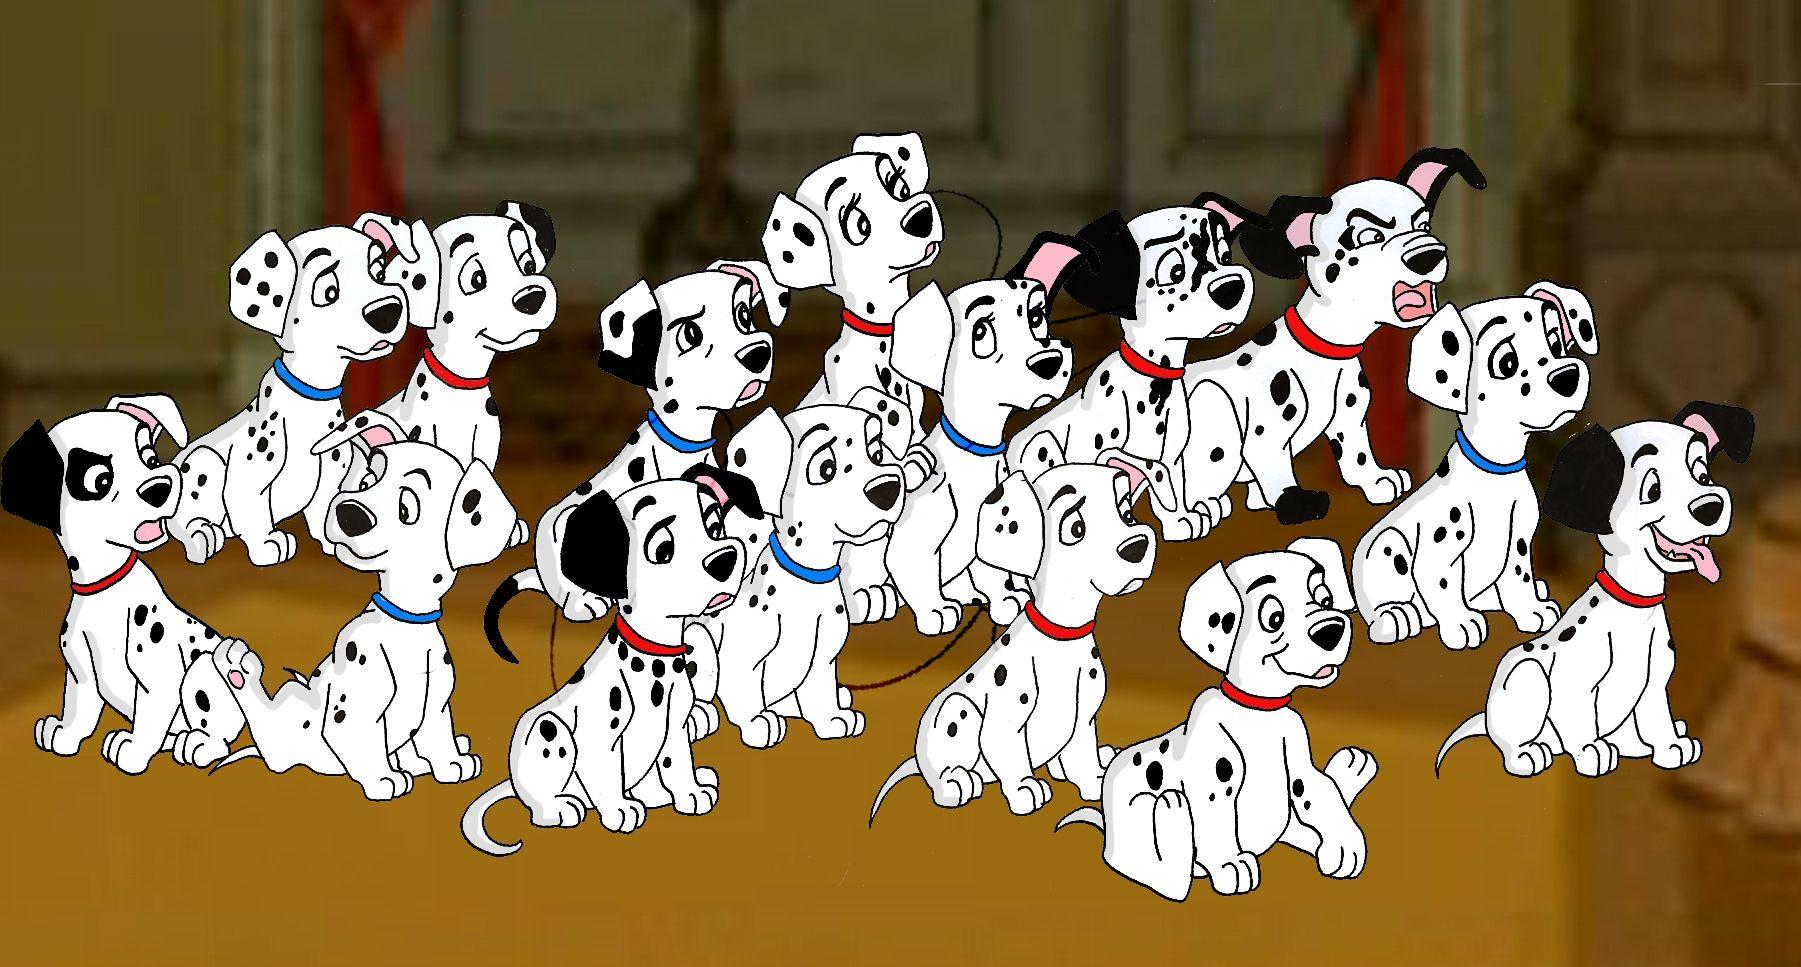 Dalmatian Puppies Image for Desktop